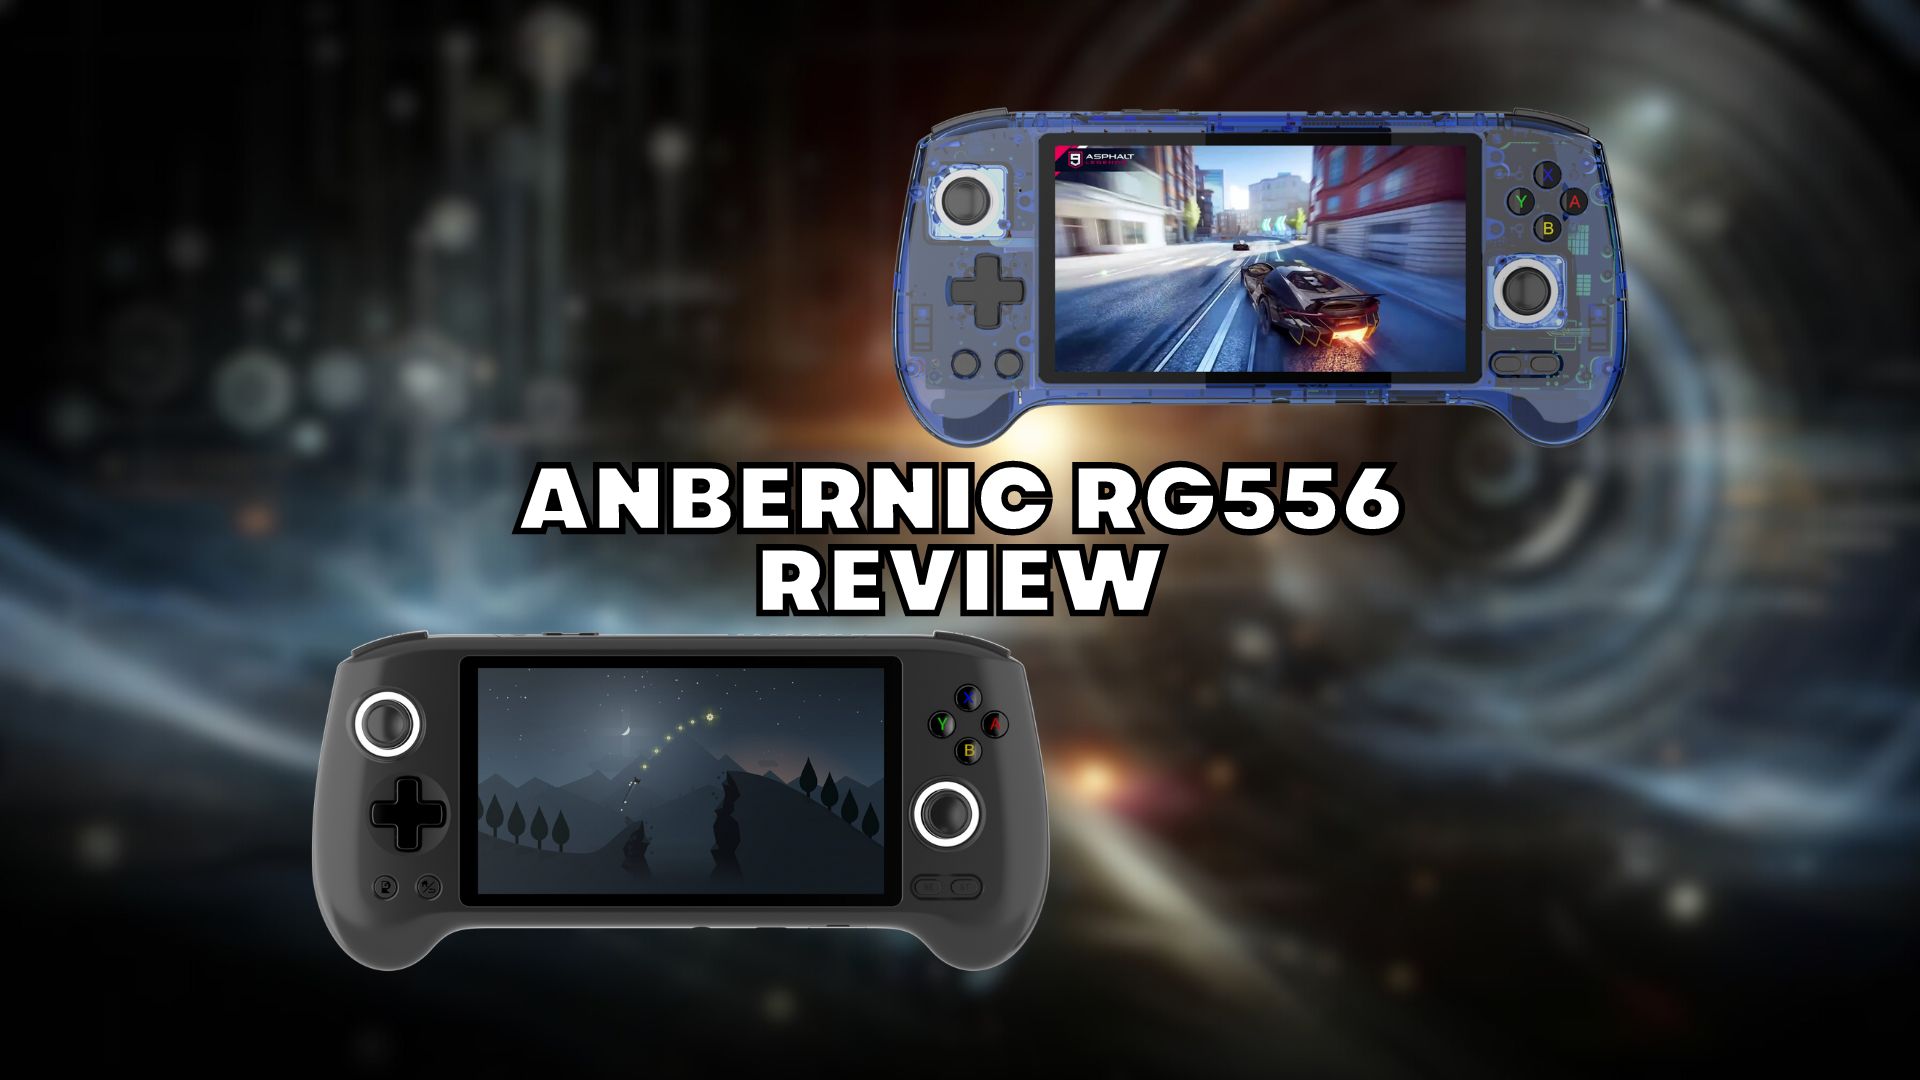 Anbernic RG556 review met video - Android gaming handheld met AMOLED scherm